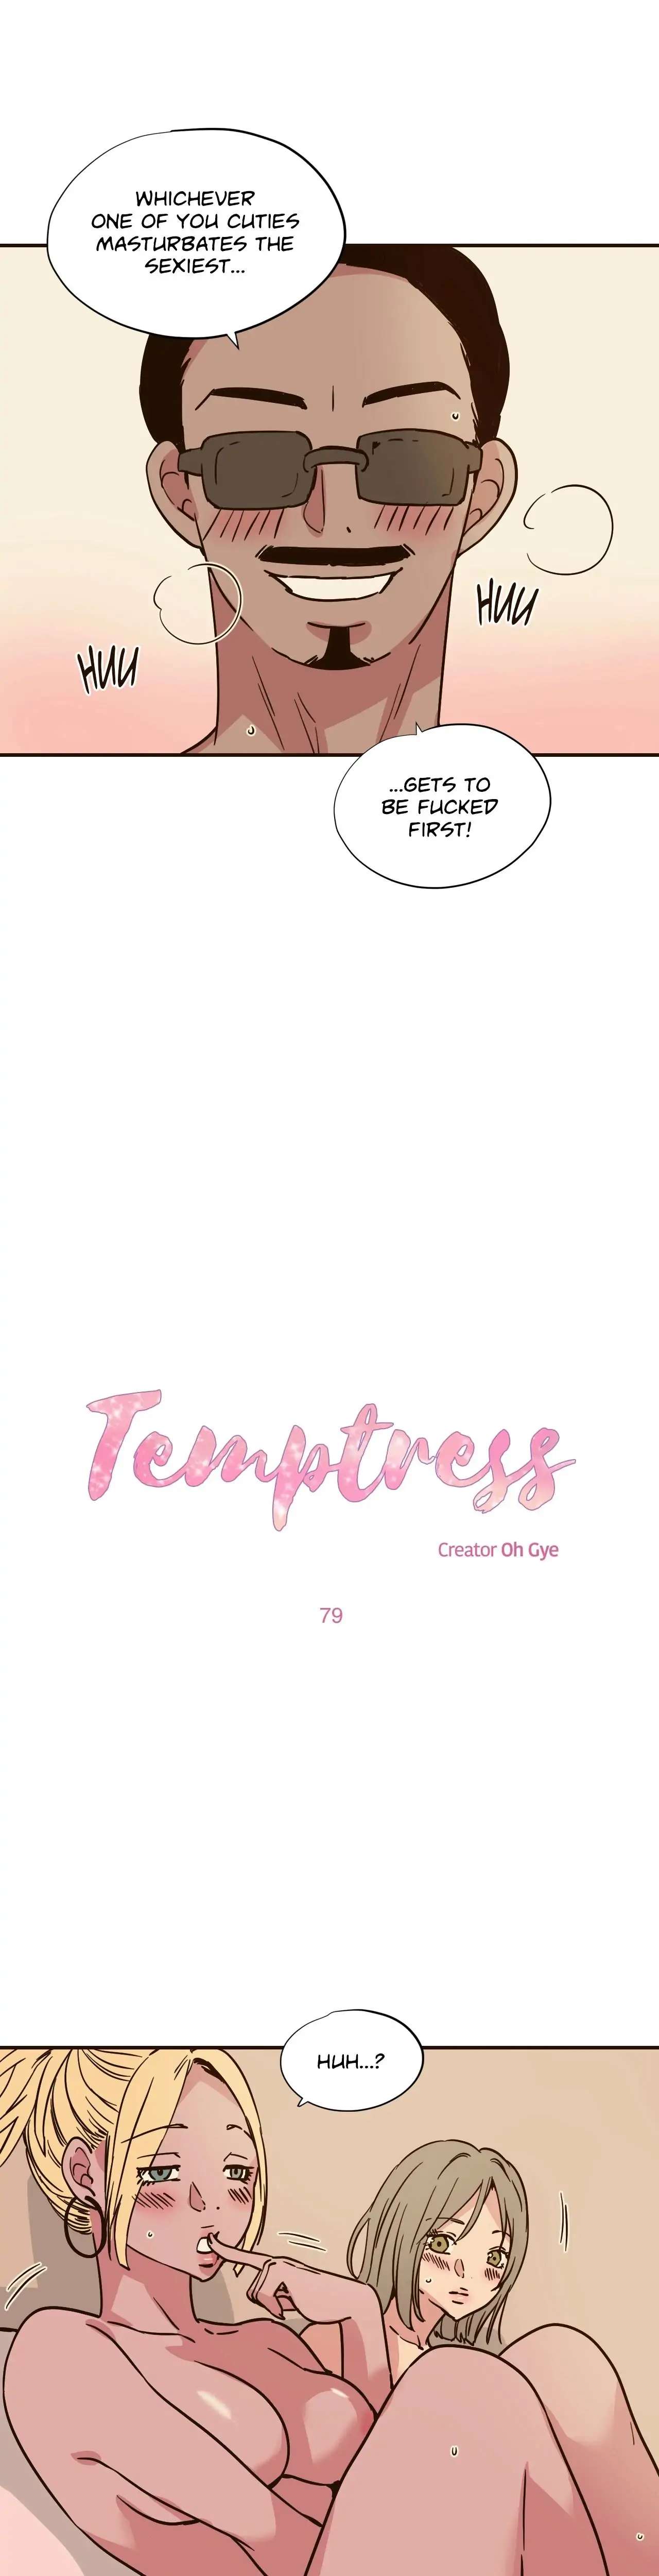 Temptress - Page 1